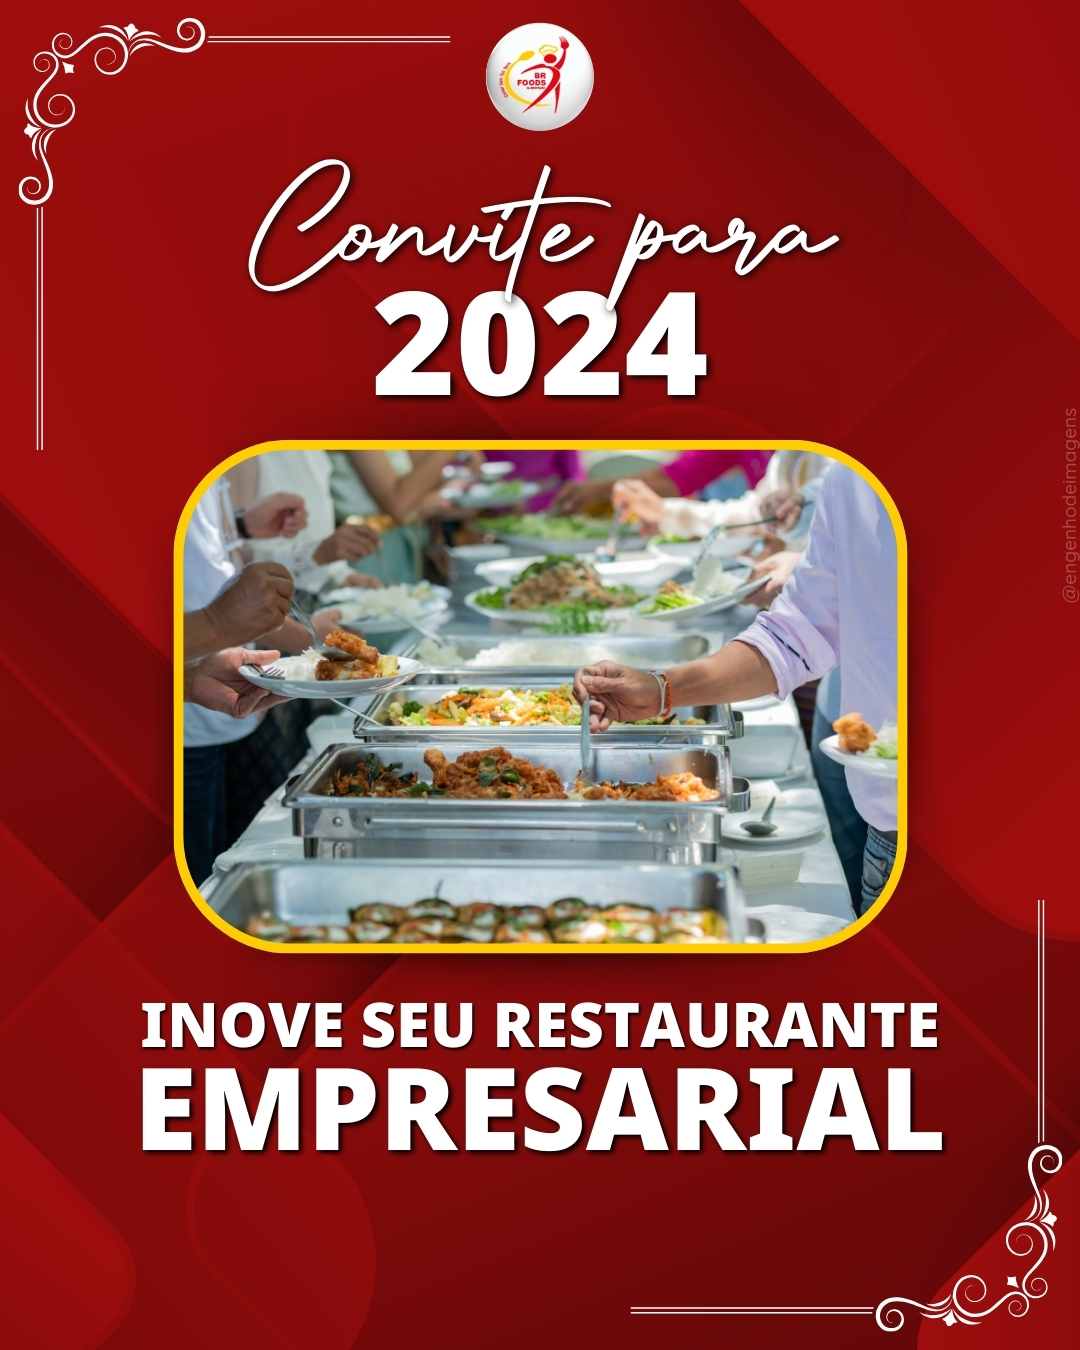 Convite gastronômico para 2024!